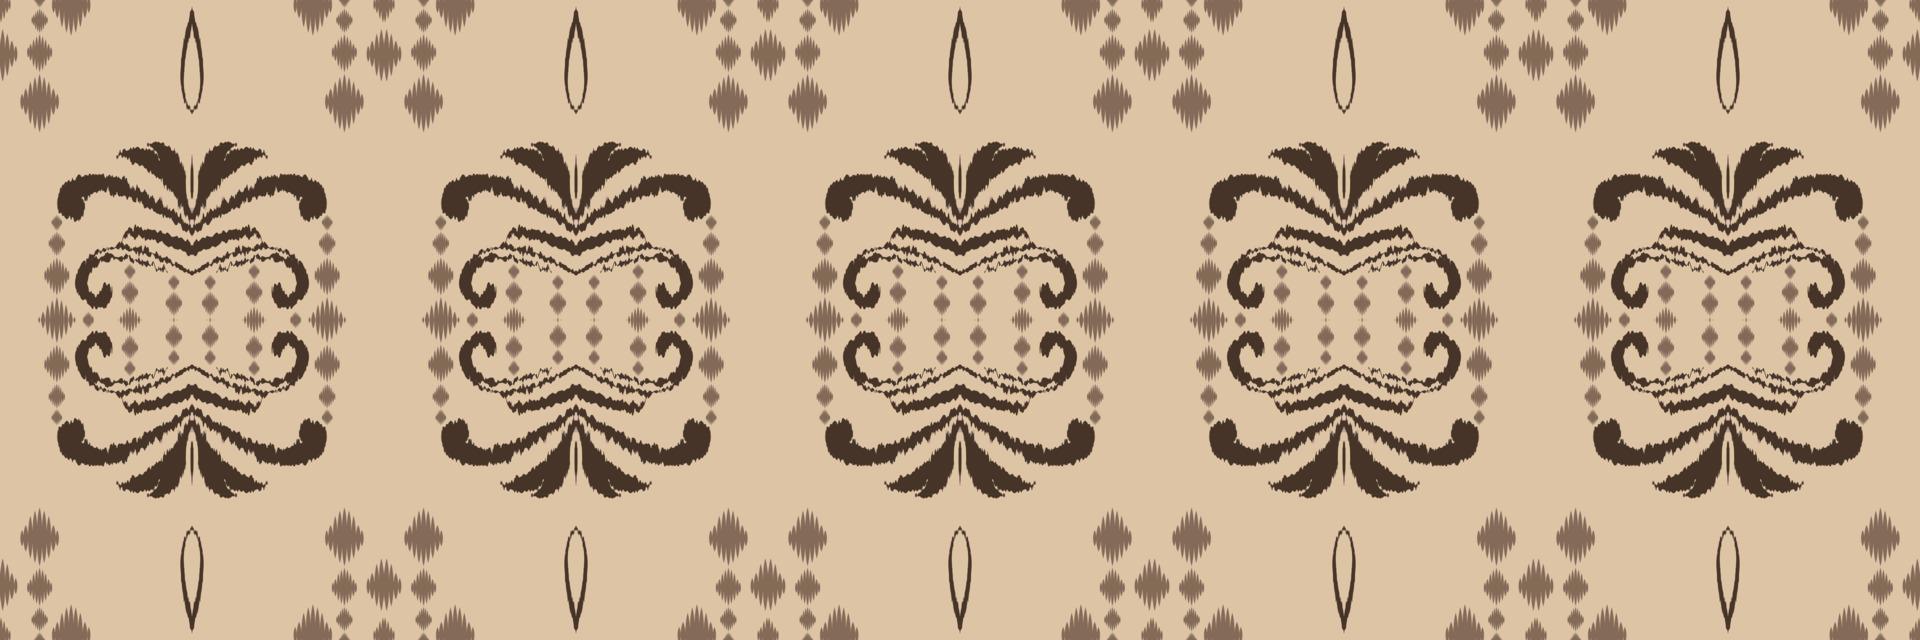 Ikat- oder Ikat-Designs Batik-Textilmuster mit nahtlosem Muster, digitales Vektordesign für Druck, Saree, Kurti, Borneo, Stoffrand, Pinselsymbole, Muster, Partykleidung vektor